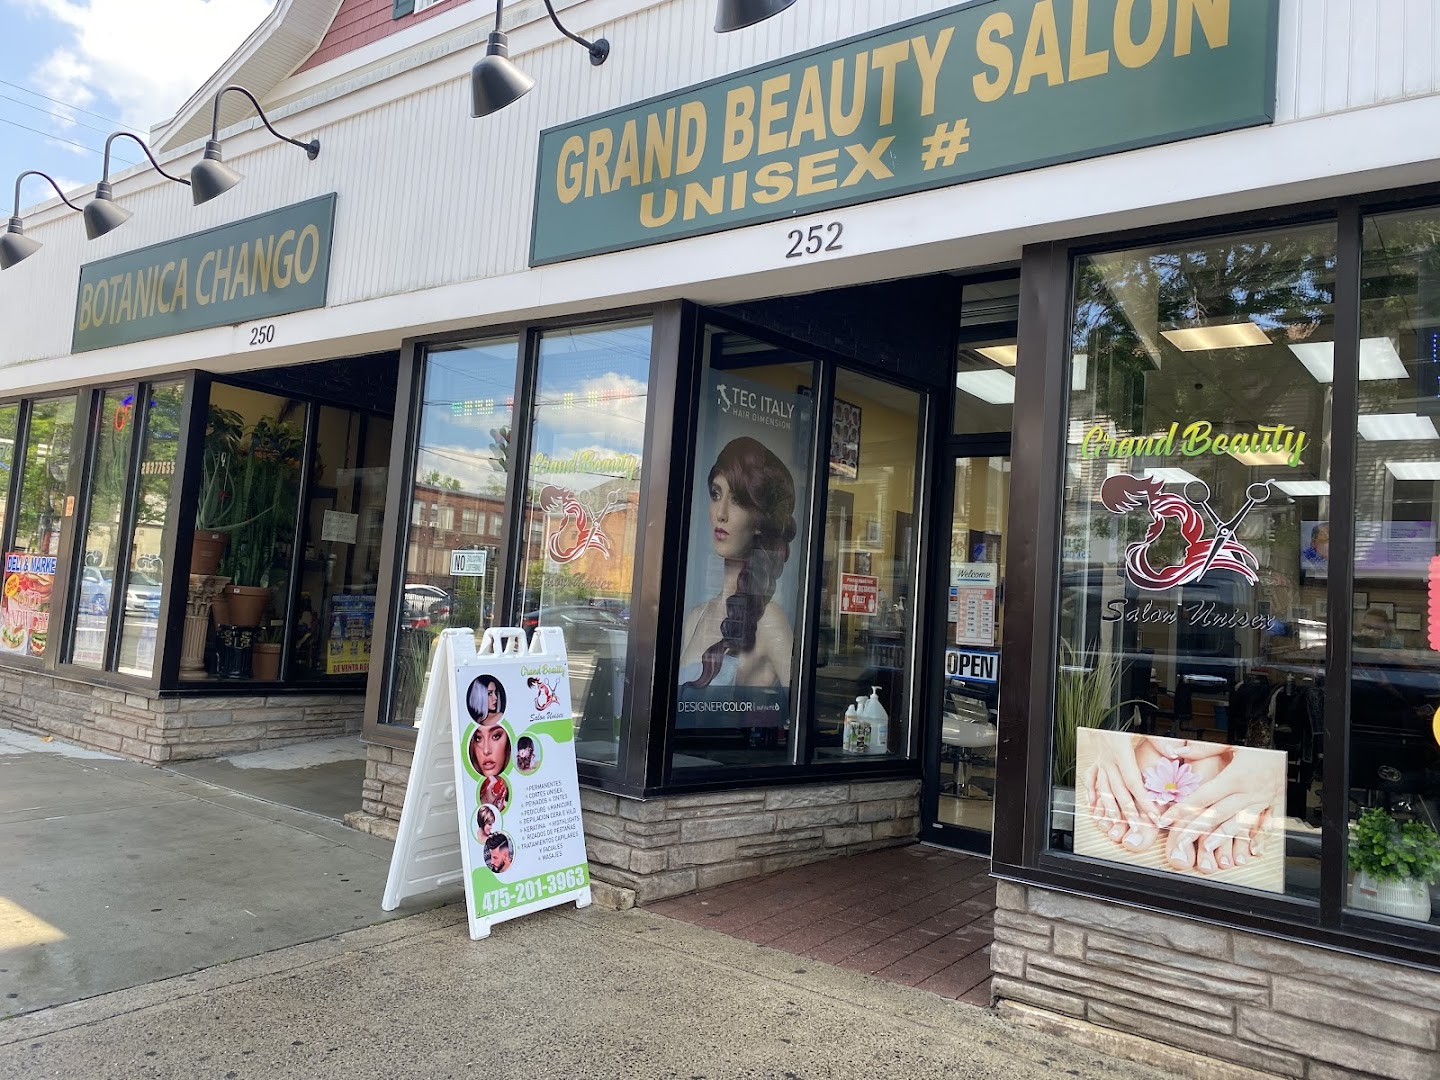 Grand beauty salon unisex